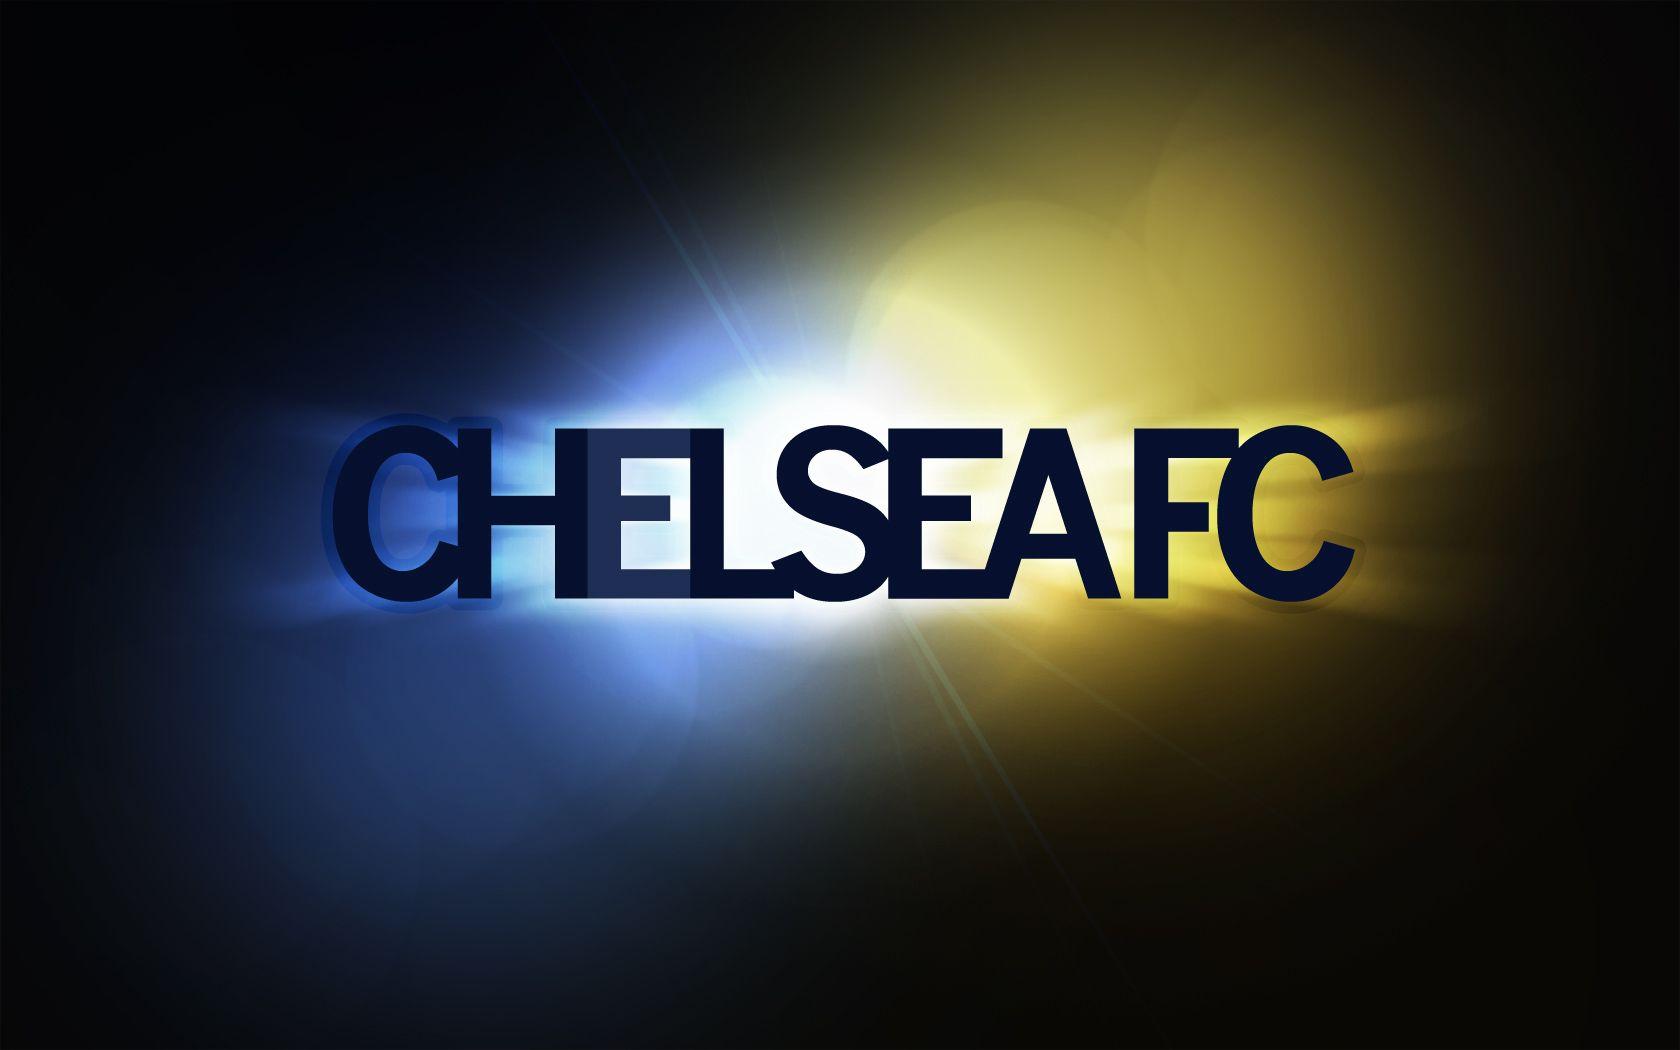 Brand new Chelsea FC Custom logo Picture Screen HD Background